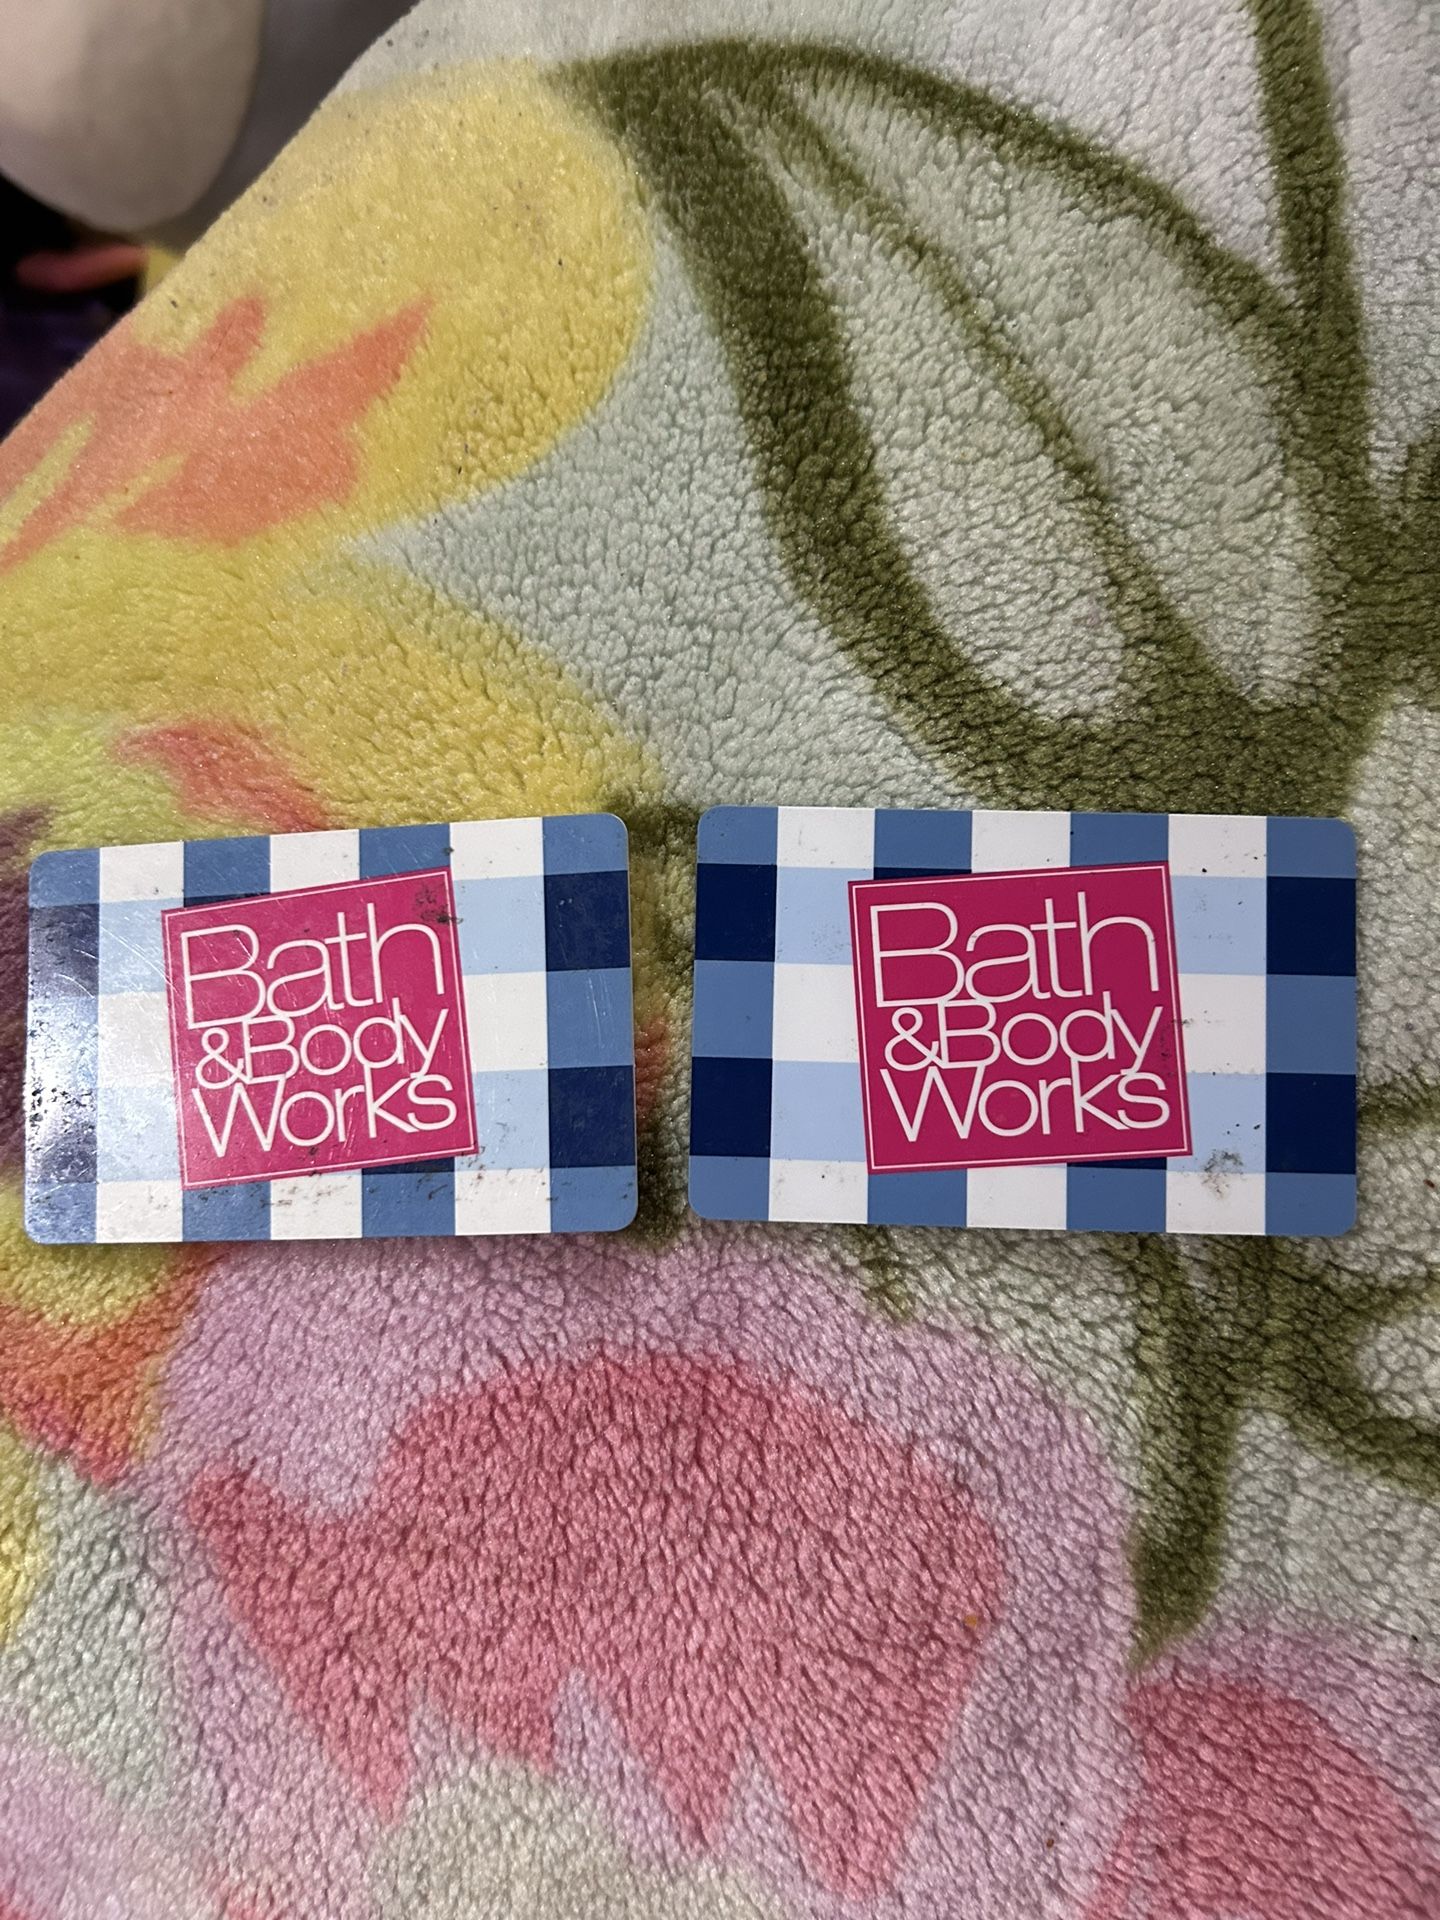 Bath and body works 